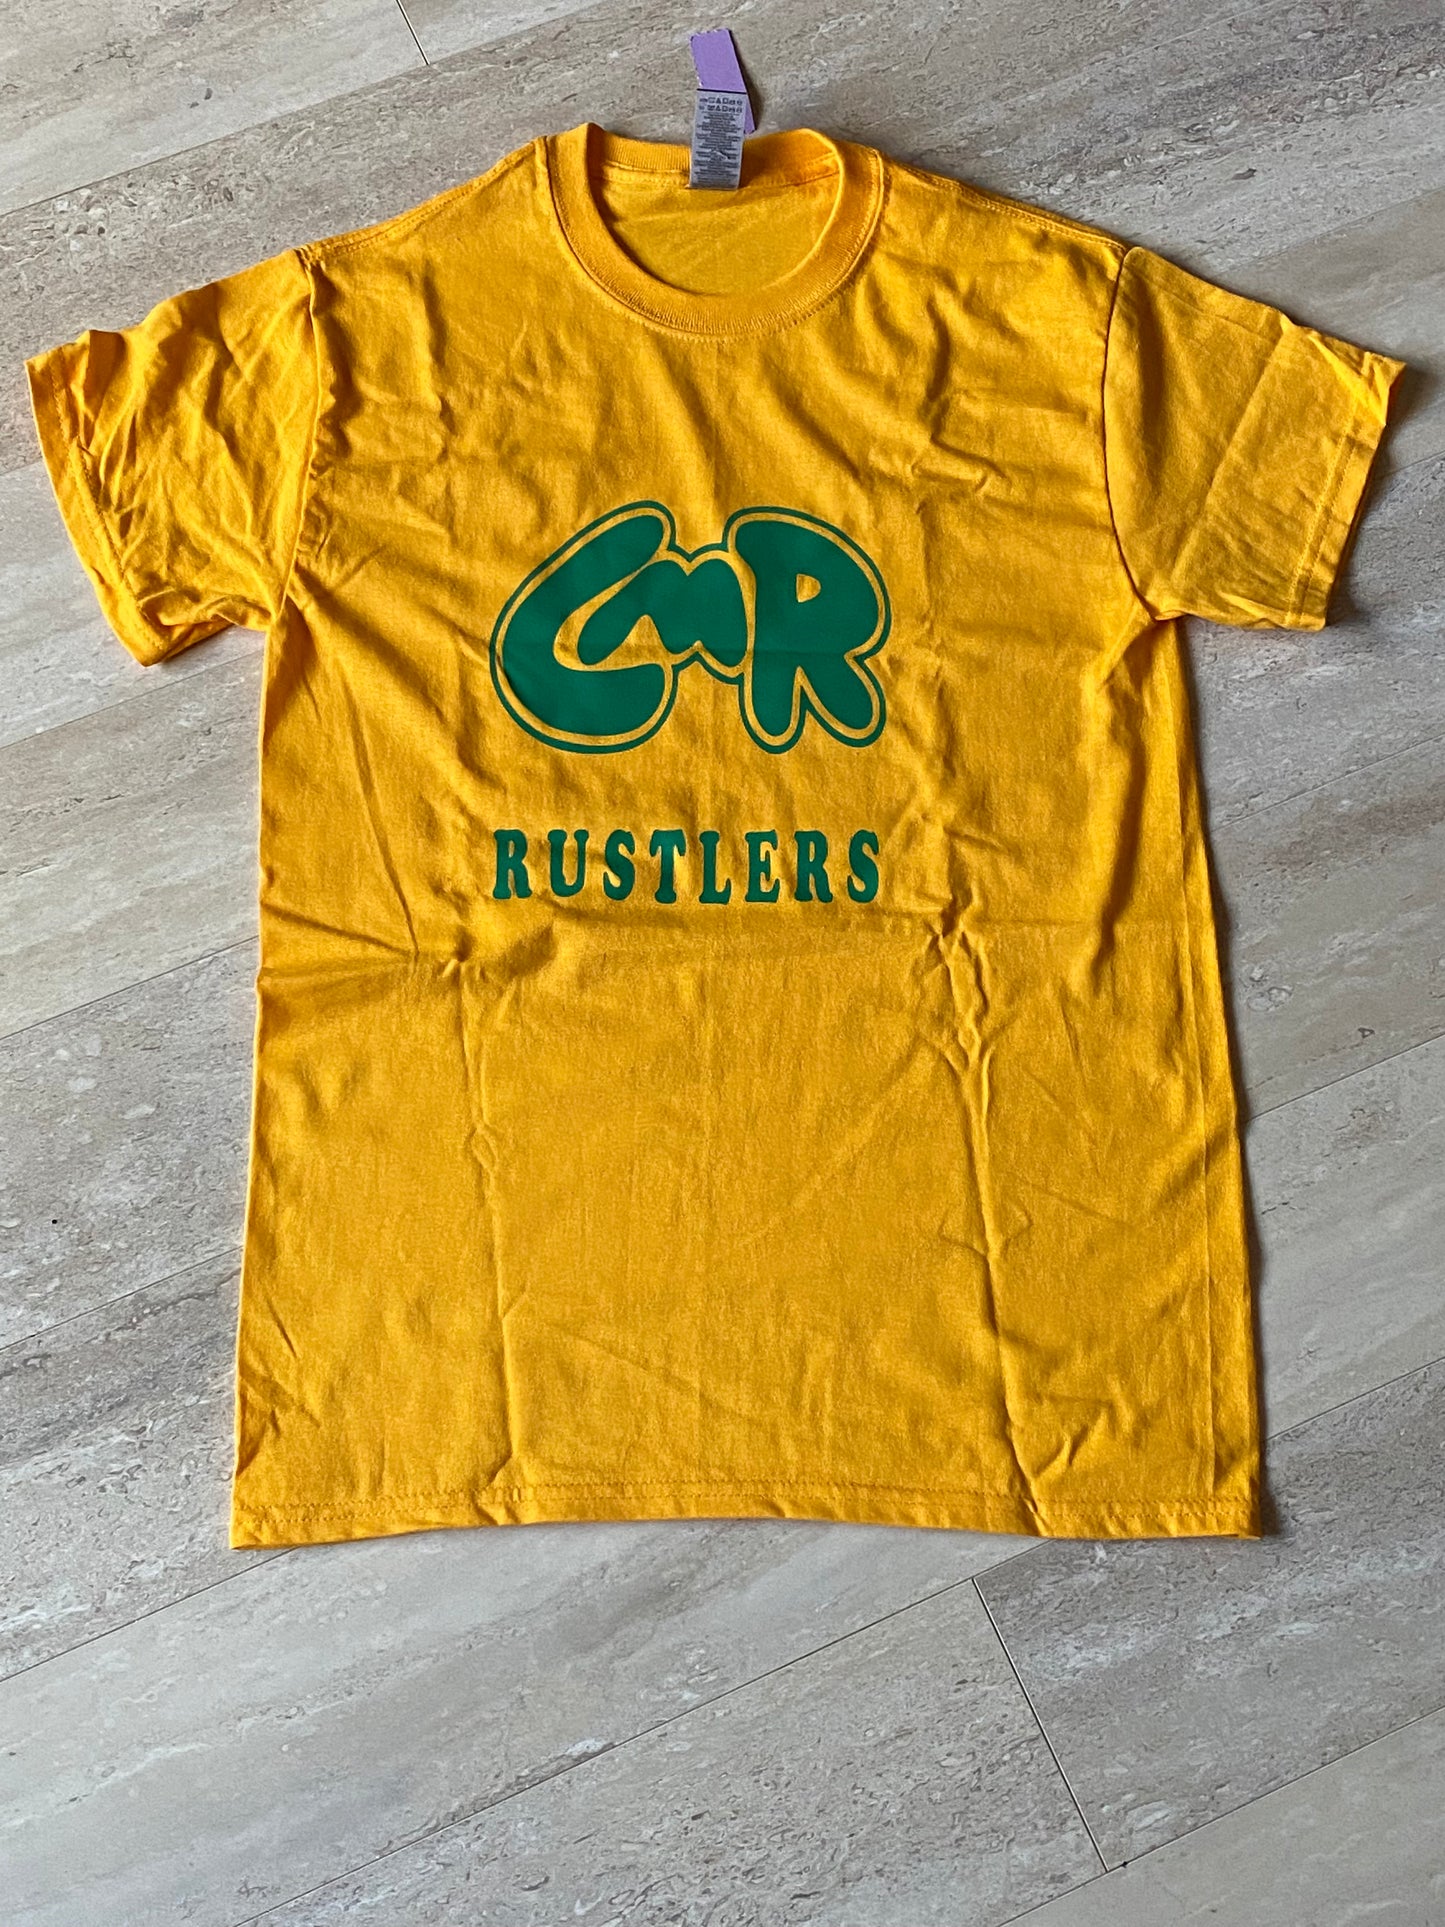 CMR High Rustlers Great Falls Montana adult t-shirt